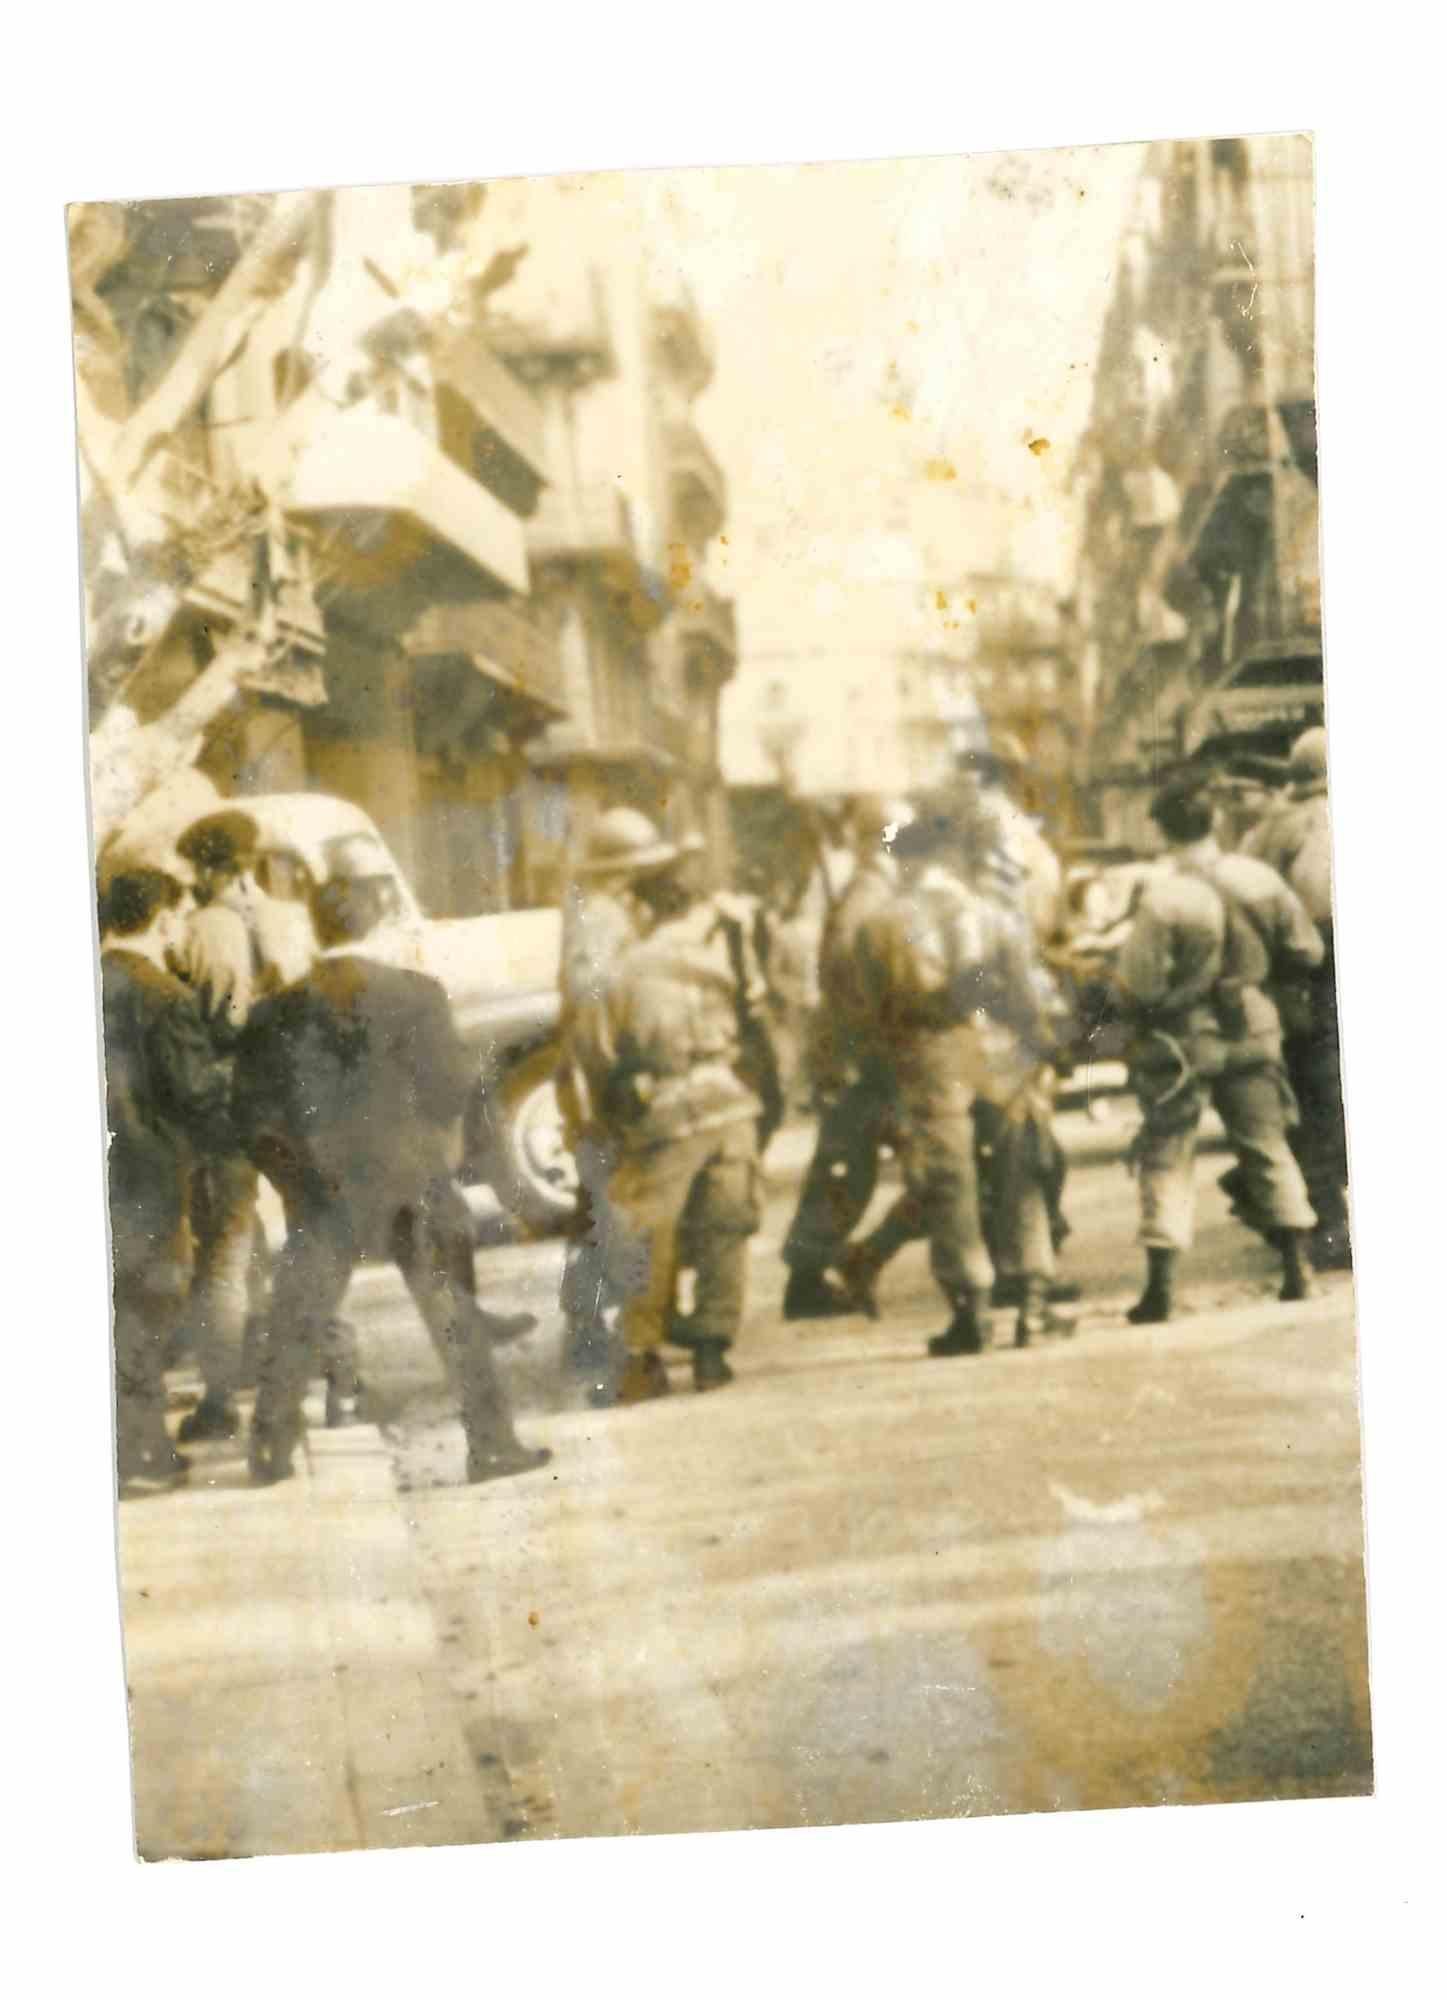  War in Algeria - Historical Photo - 1960s